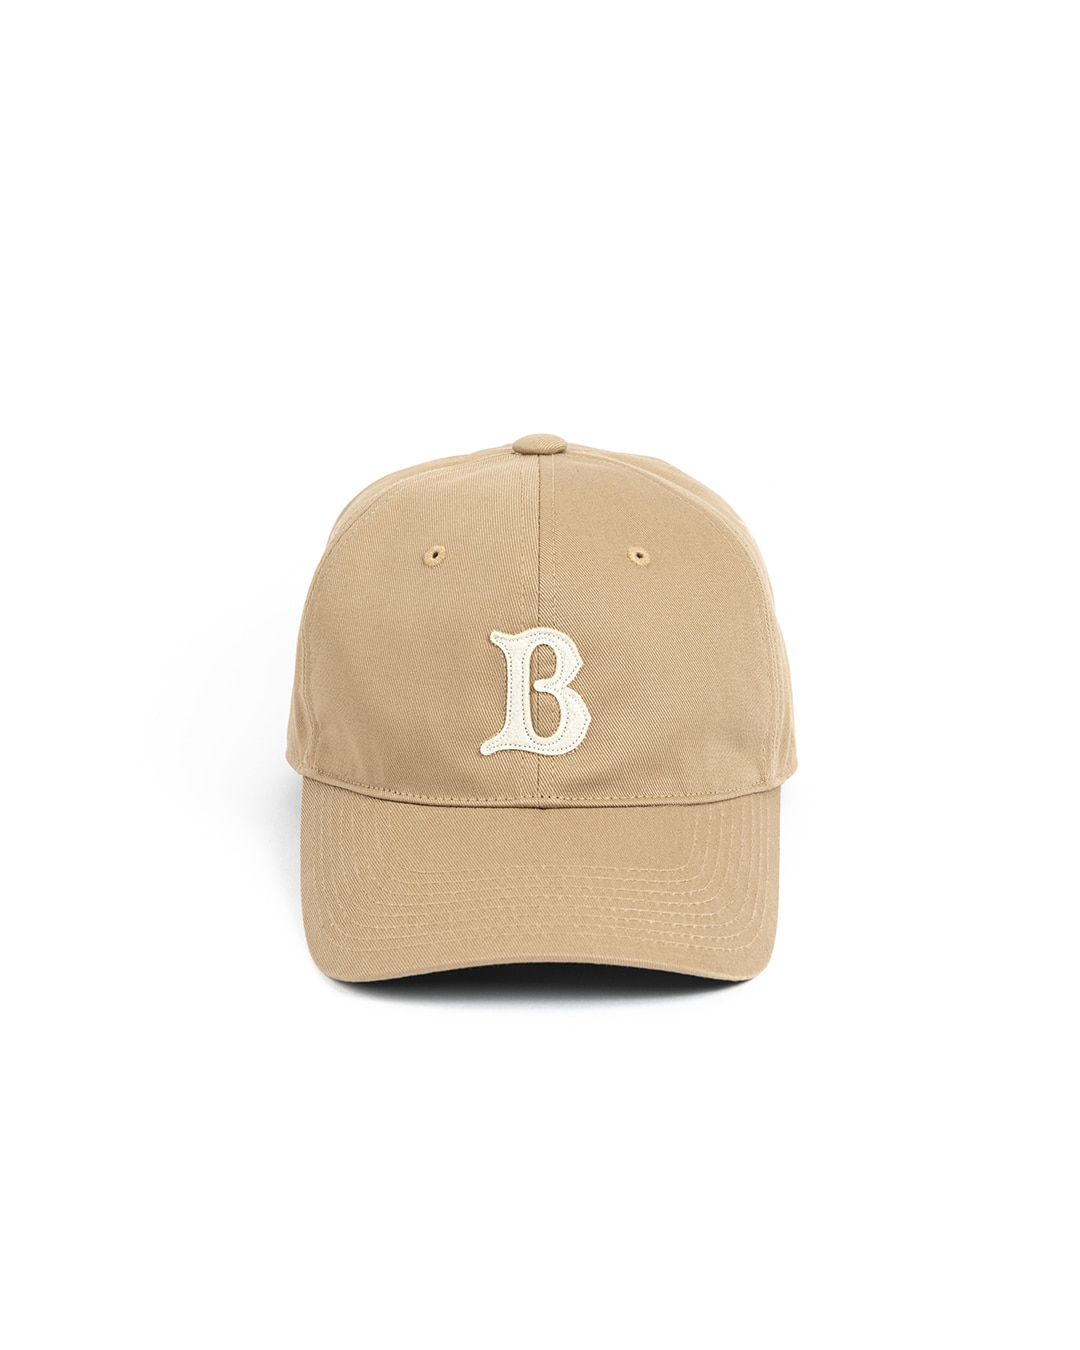 LB TWILL BASEBALL CAP (beige)